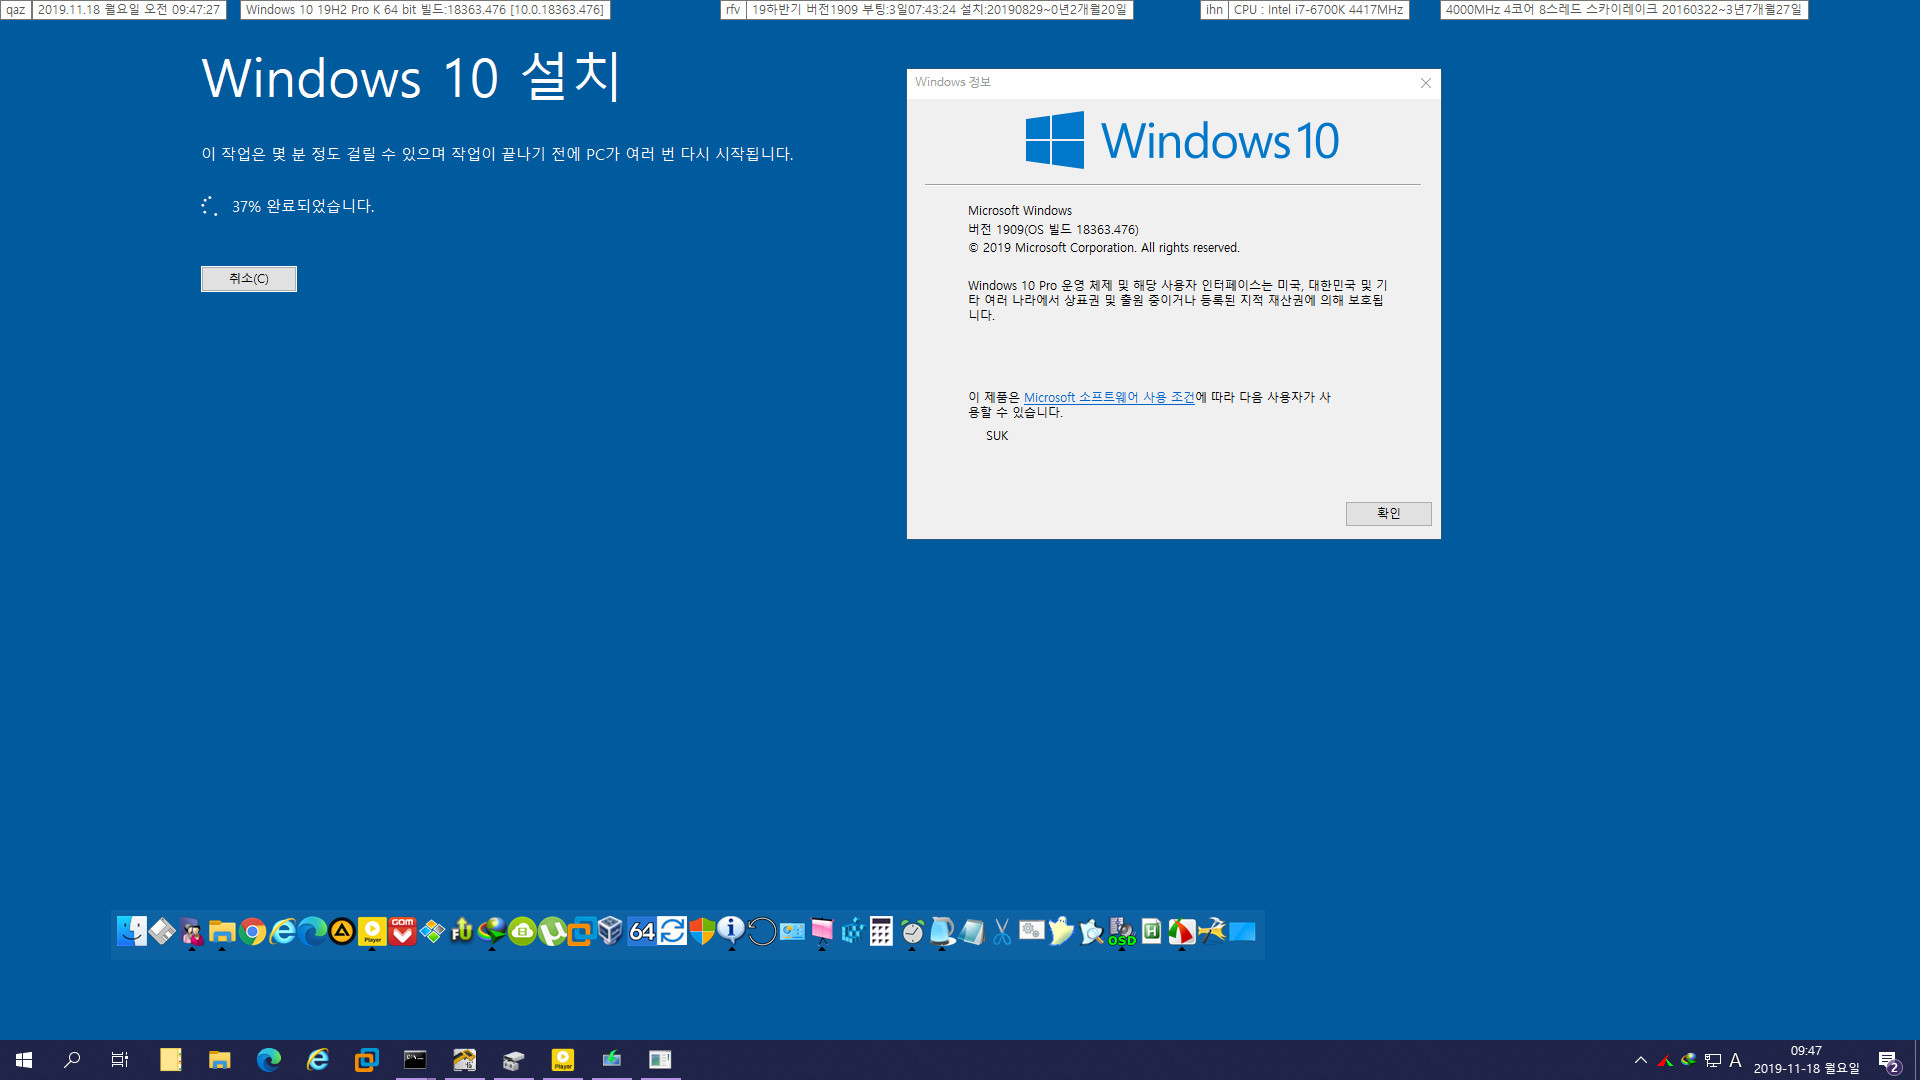 Windows 10 20H1 슬로우 링으로 나온 19013.1 빌드 - ms표 iso 파일 - Windows10_InsiderPreview_Client_x64_ko-kr_19013.iso 로 업그레이드 설치중 입니다 2019-11-18_094727.jpg